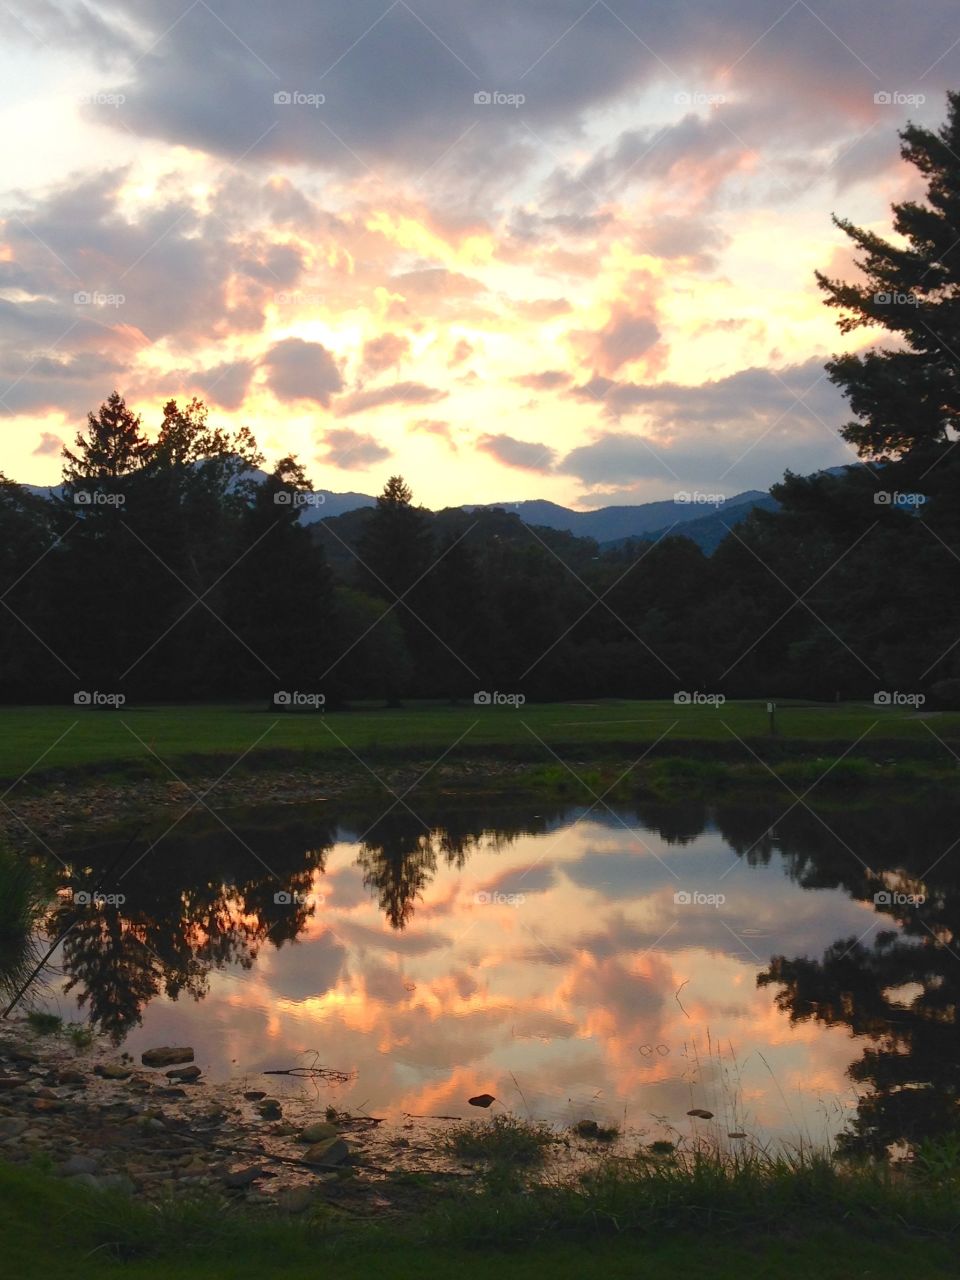 Dramatic sky reflecting on pond